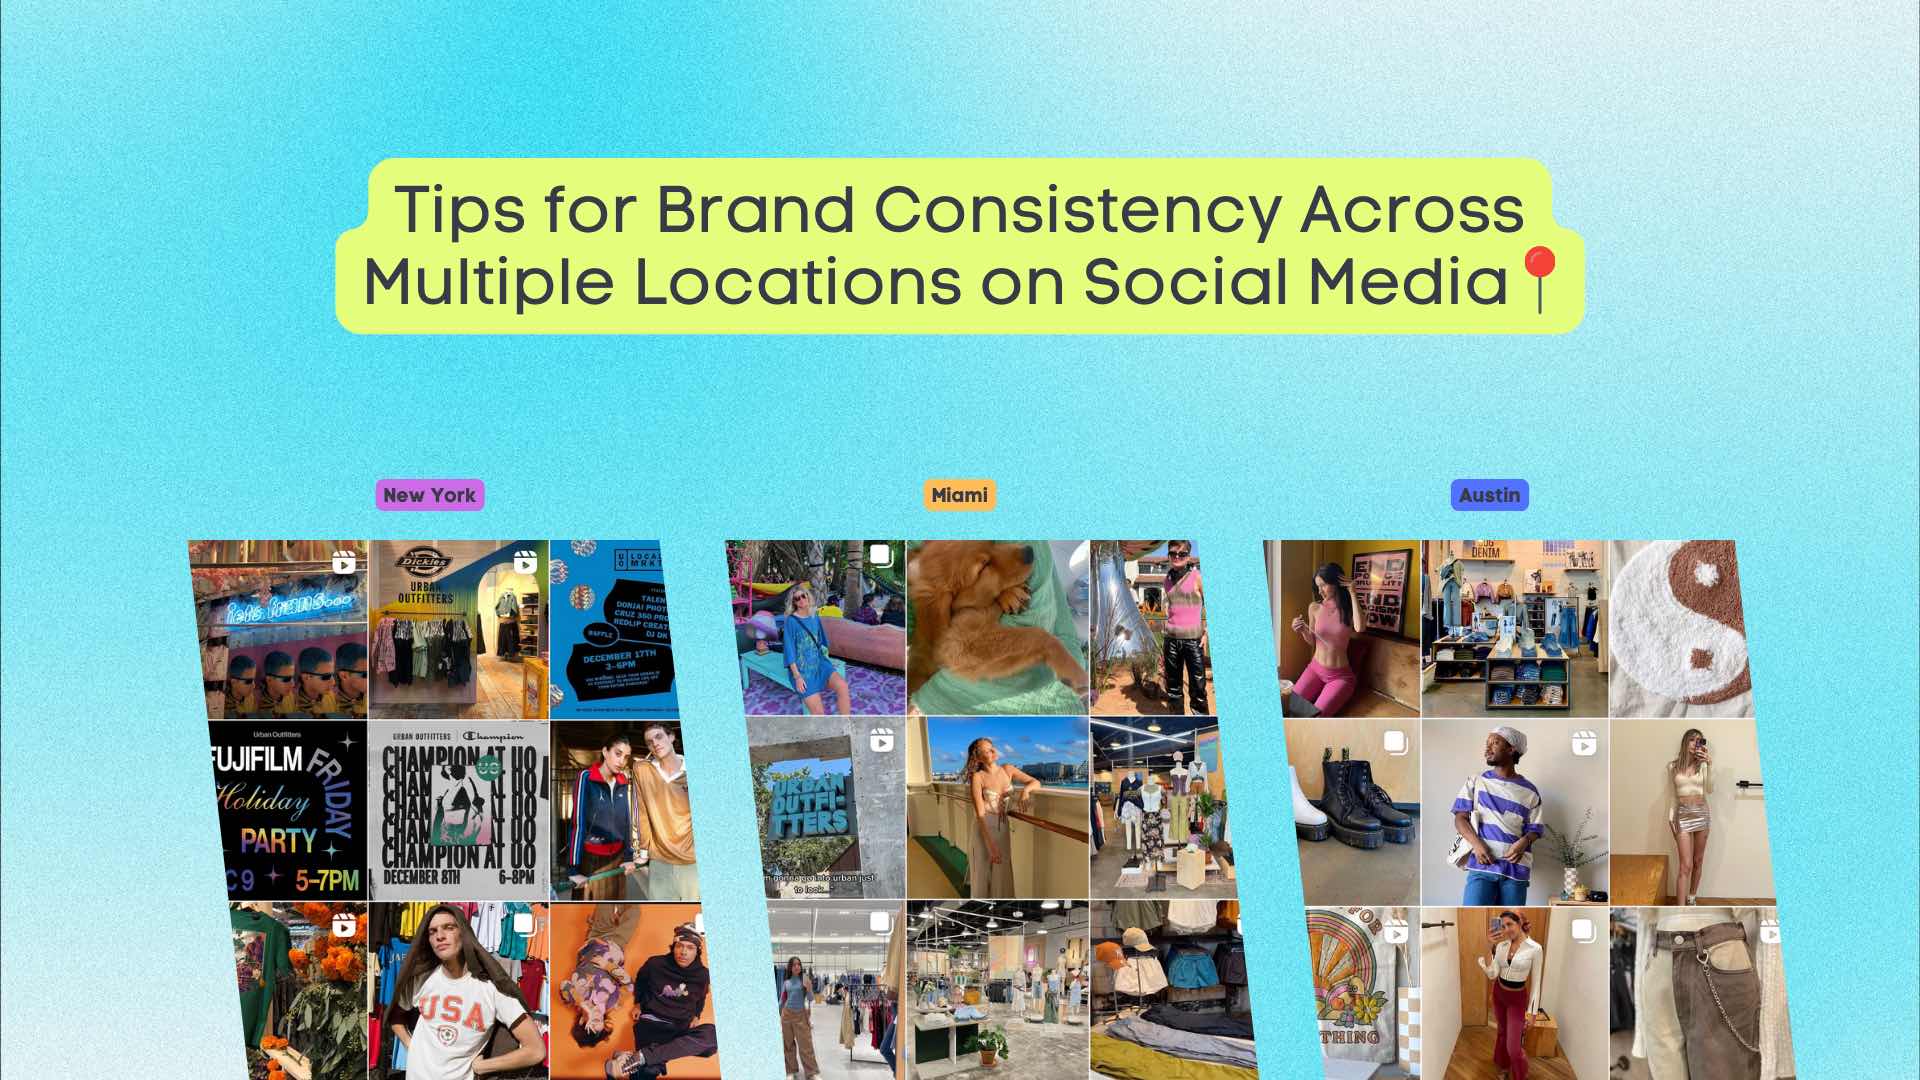 Tips for Brand Consistency Across Multiple Locations on Social Media